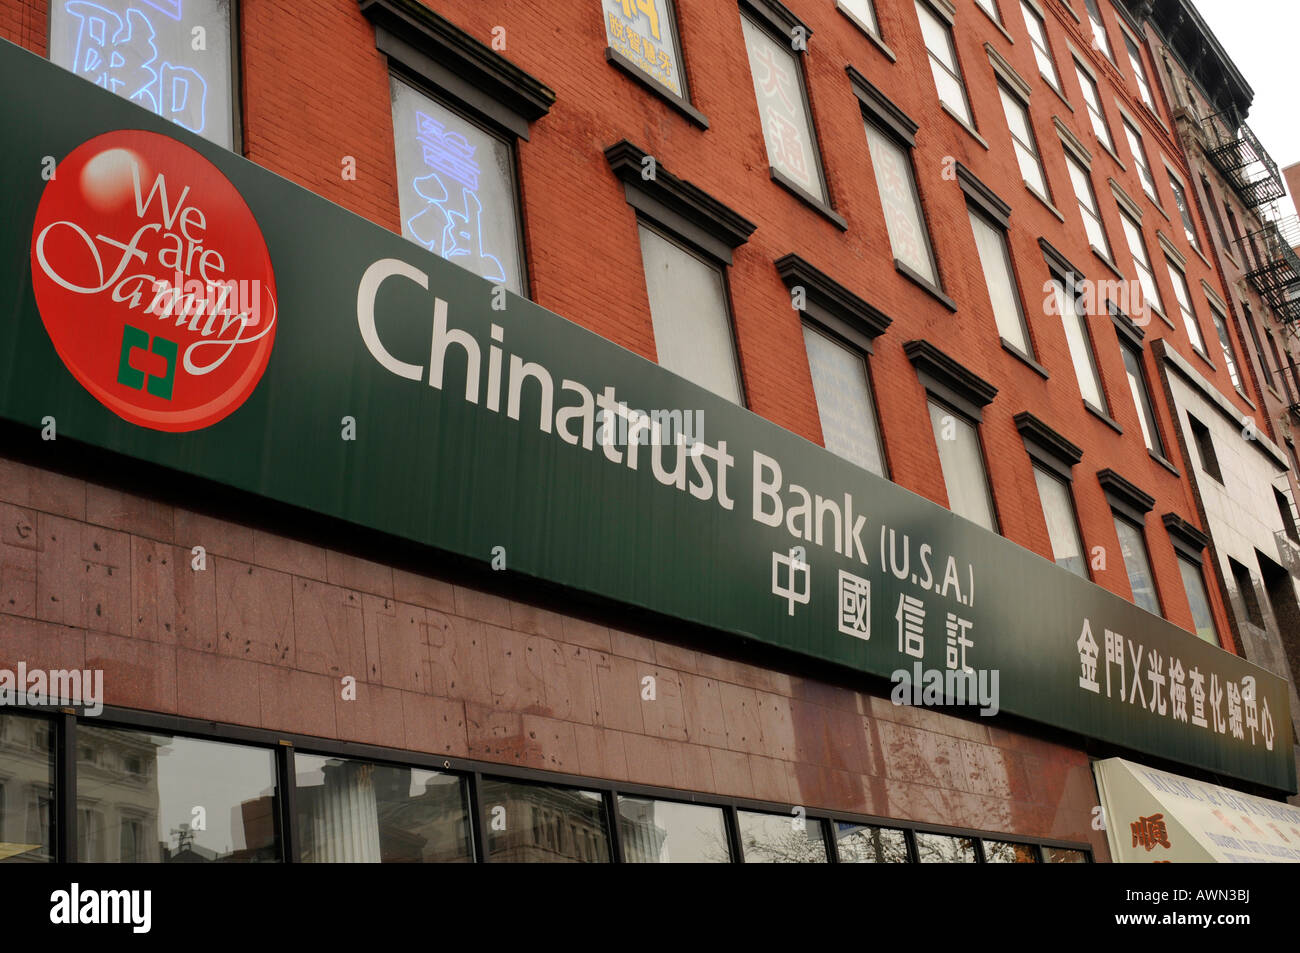 Chinatrust Bank, Chinatown, New York, USA Stock Photo